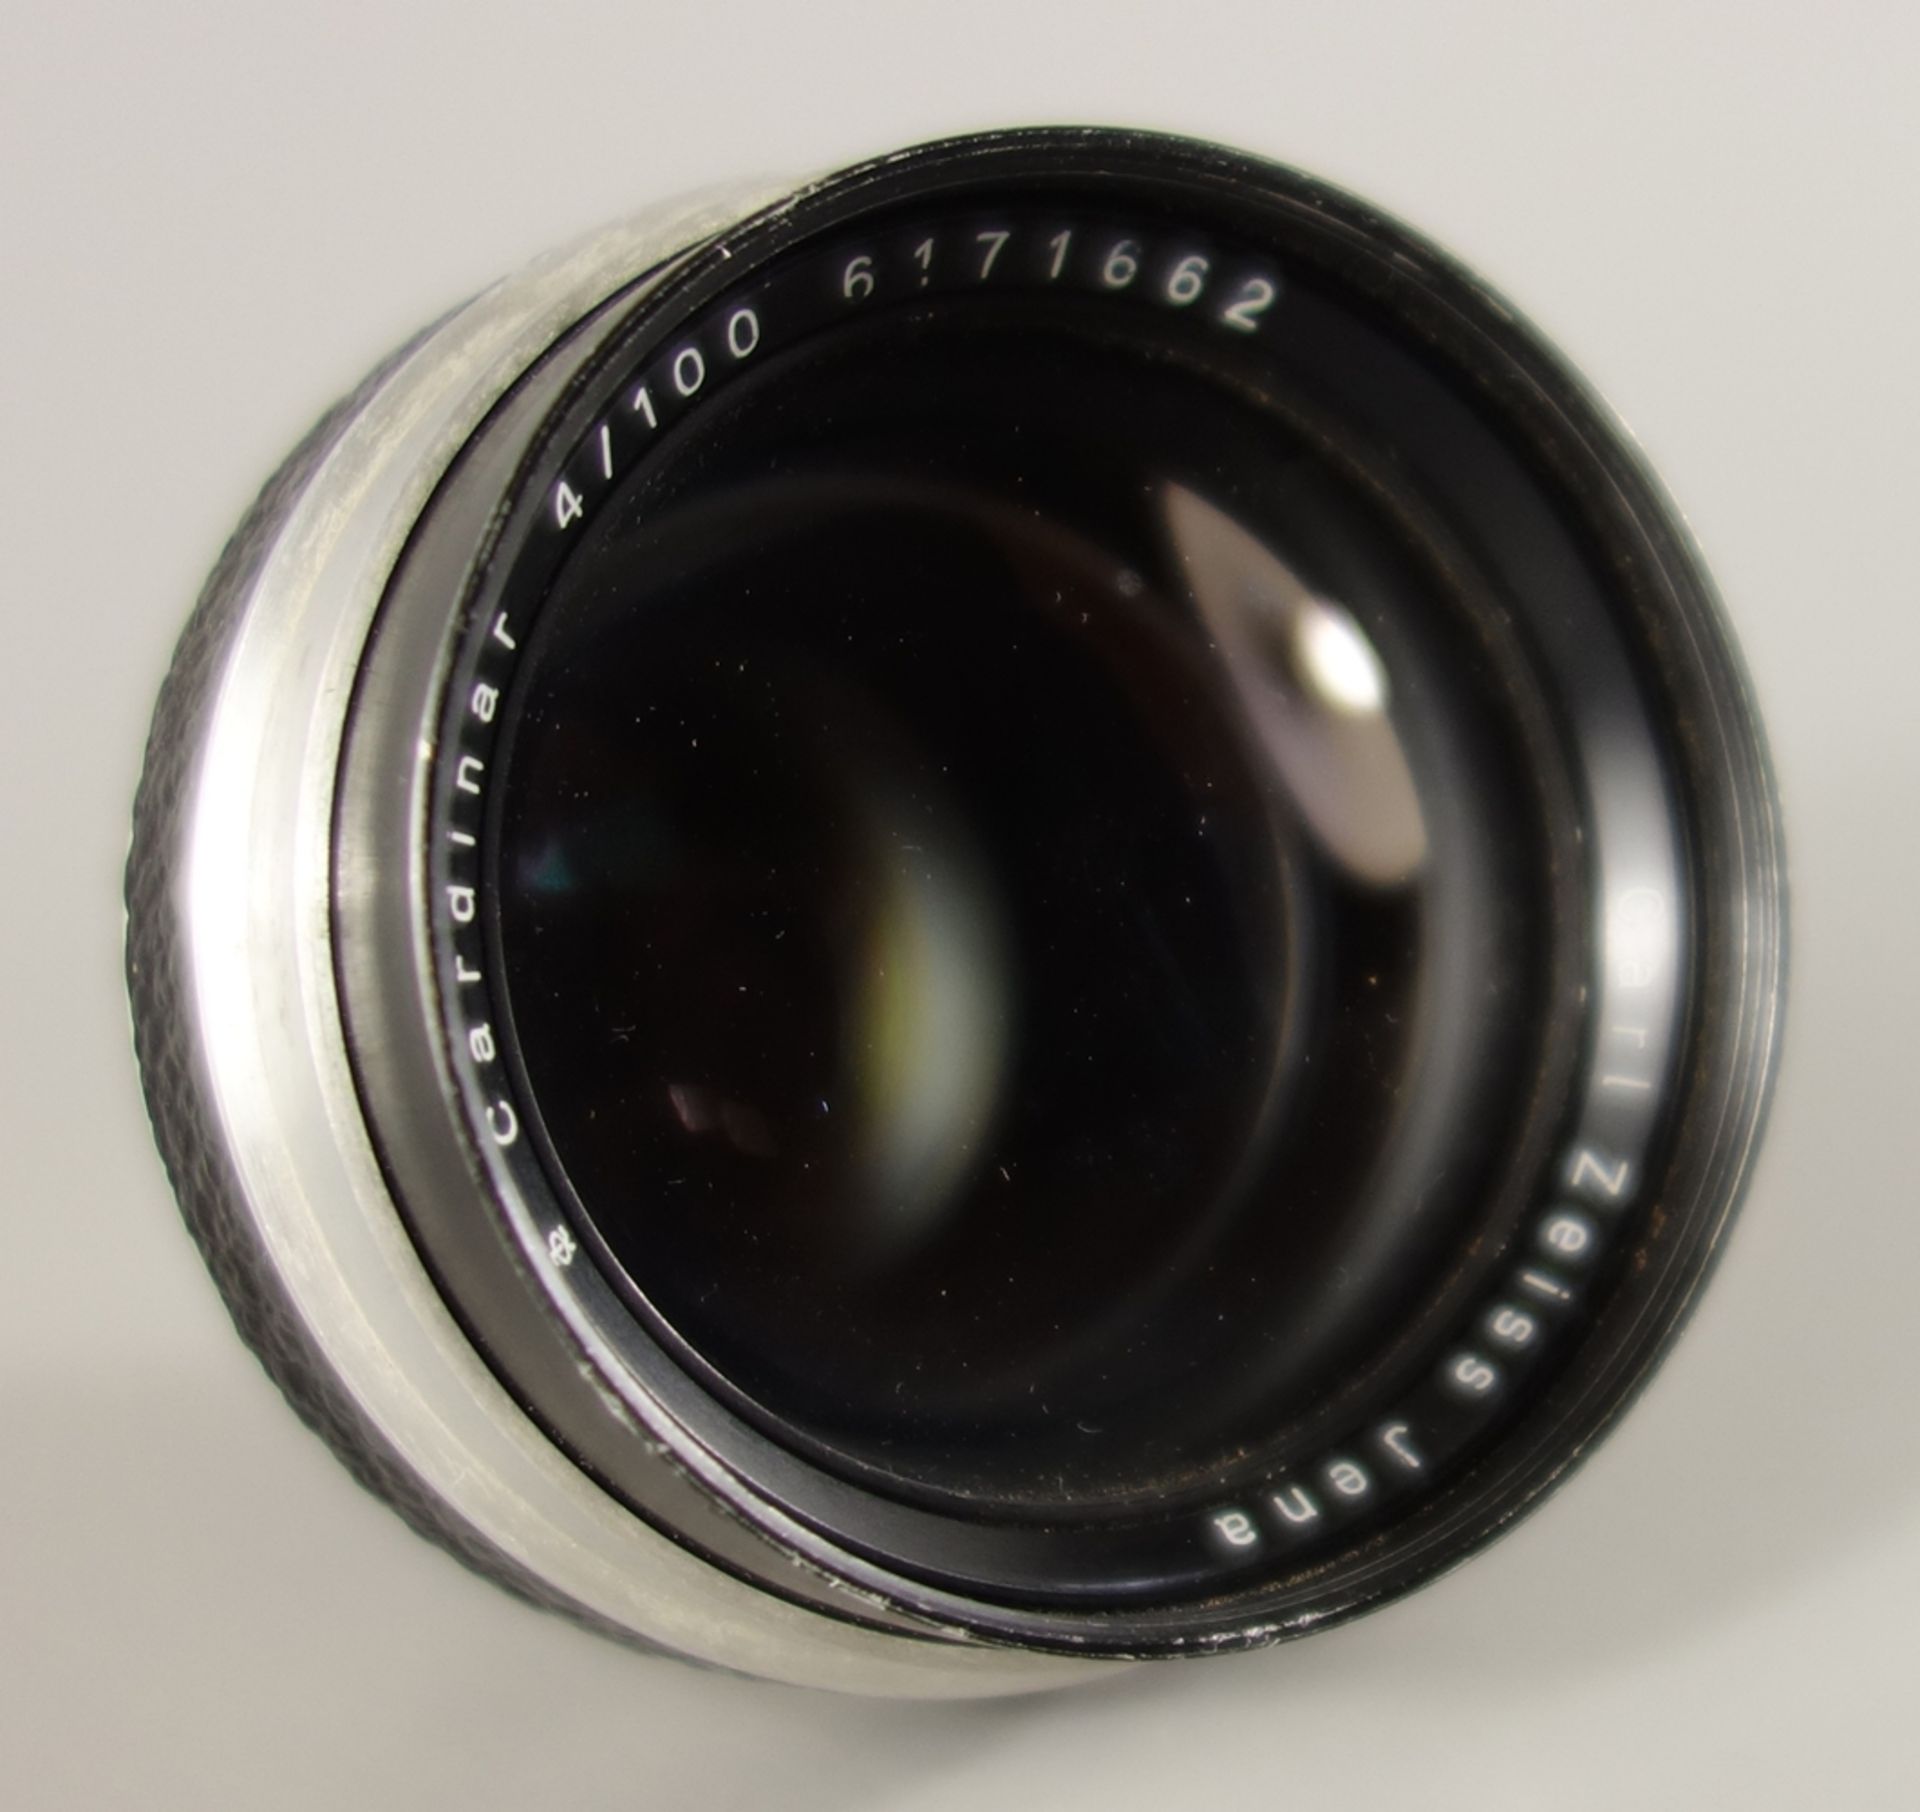 Tele-Objektiv für Kodak Retina, Schneider-Kreuznach Retina Longar-Xenon C 1:4/80 mm, 1954-60,